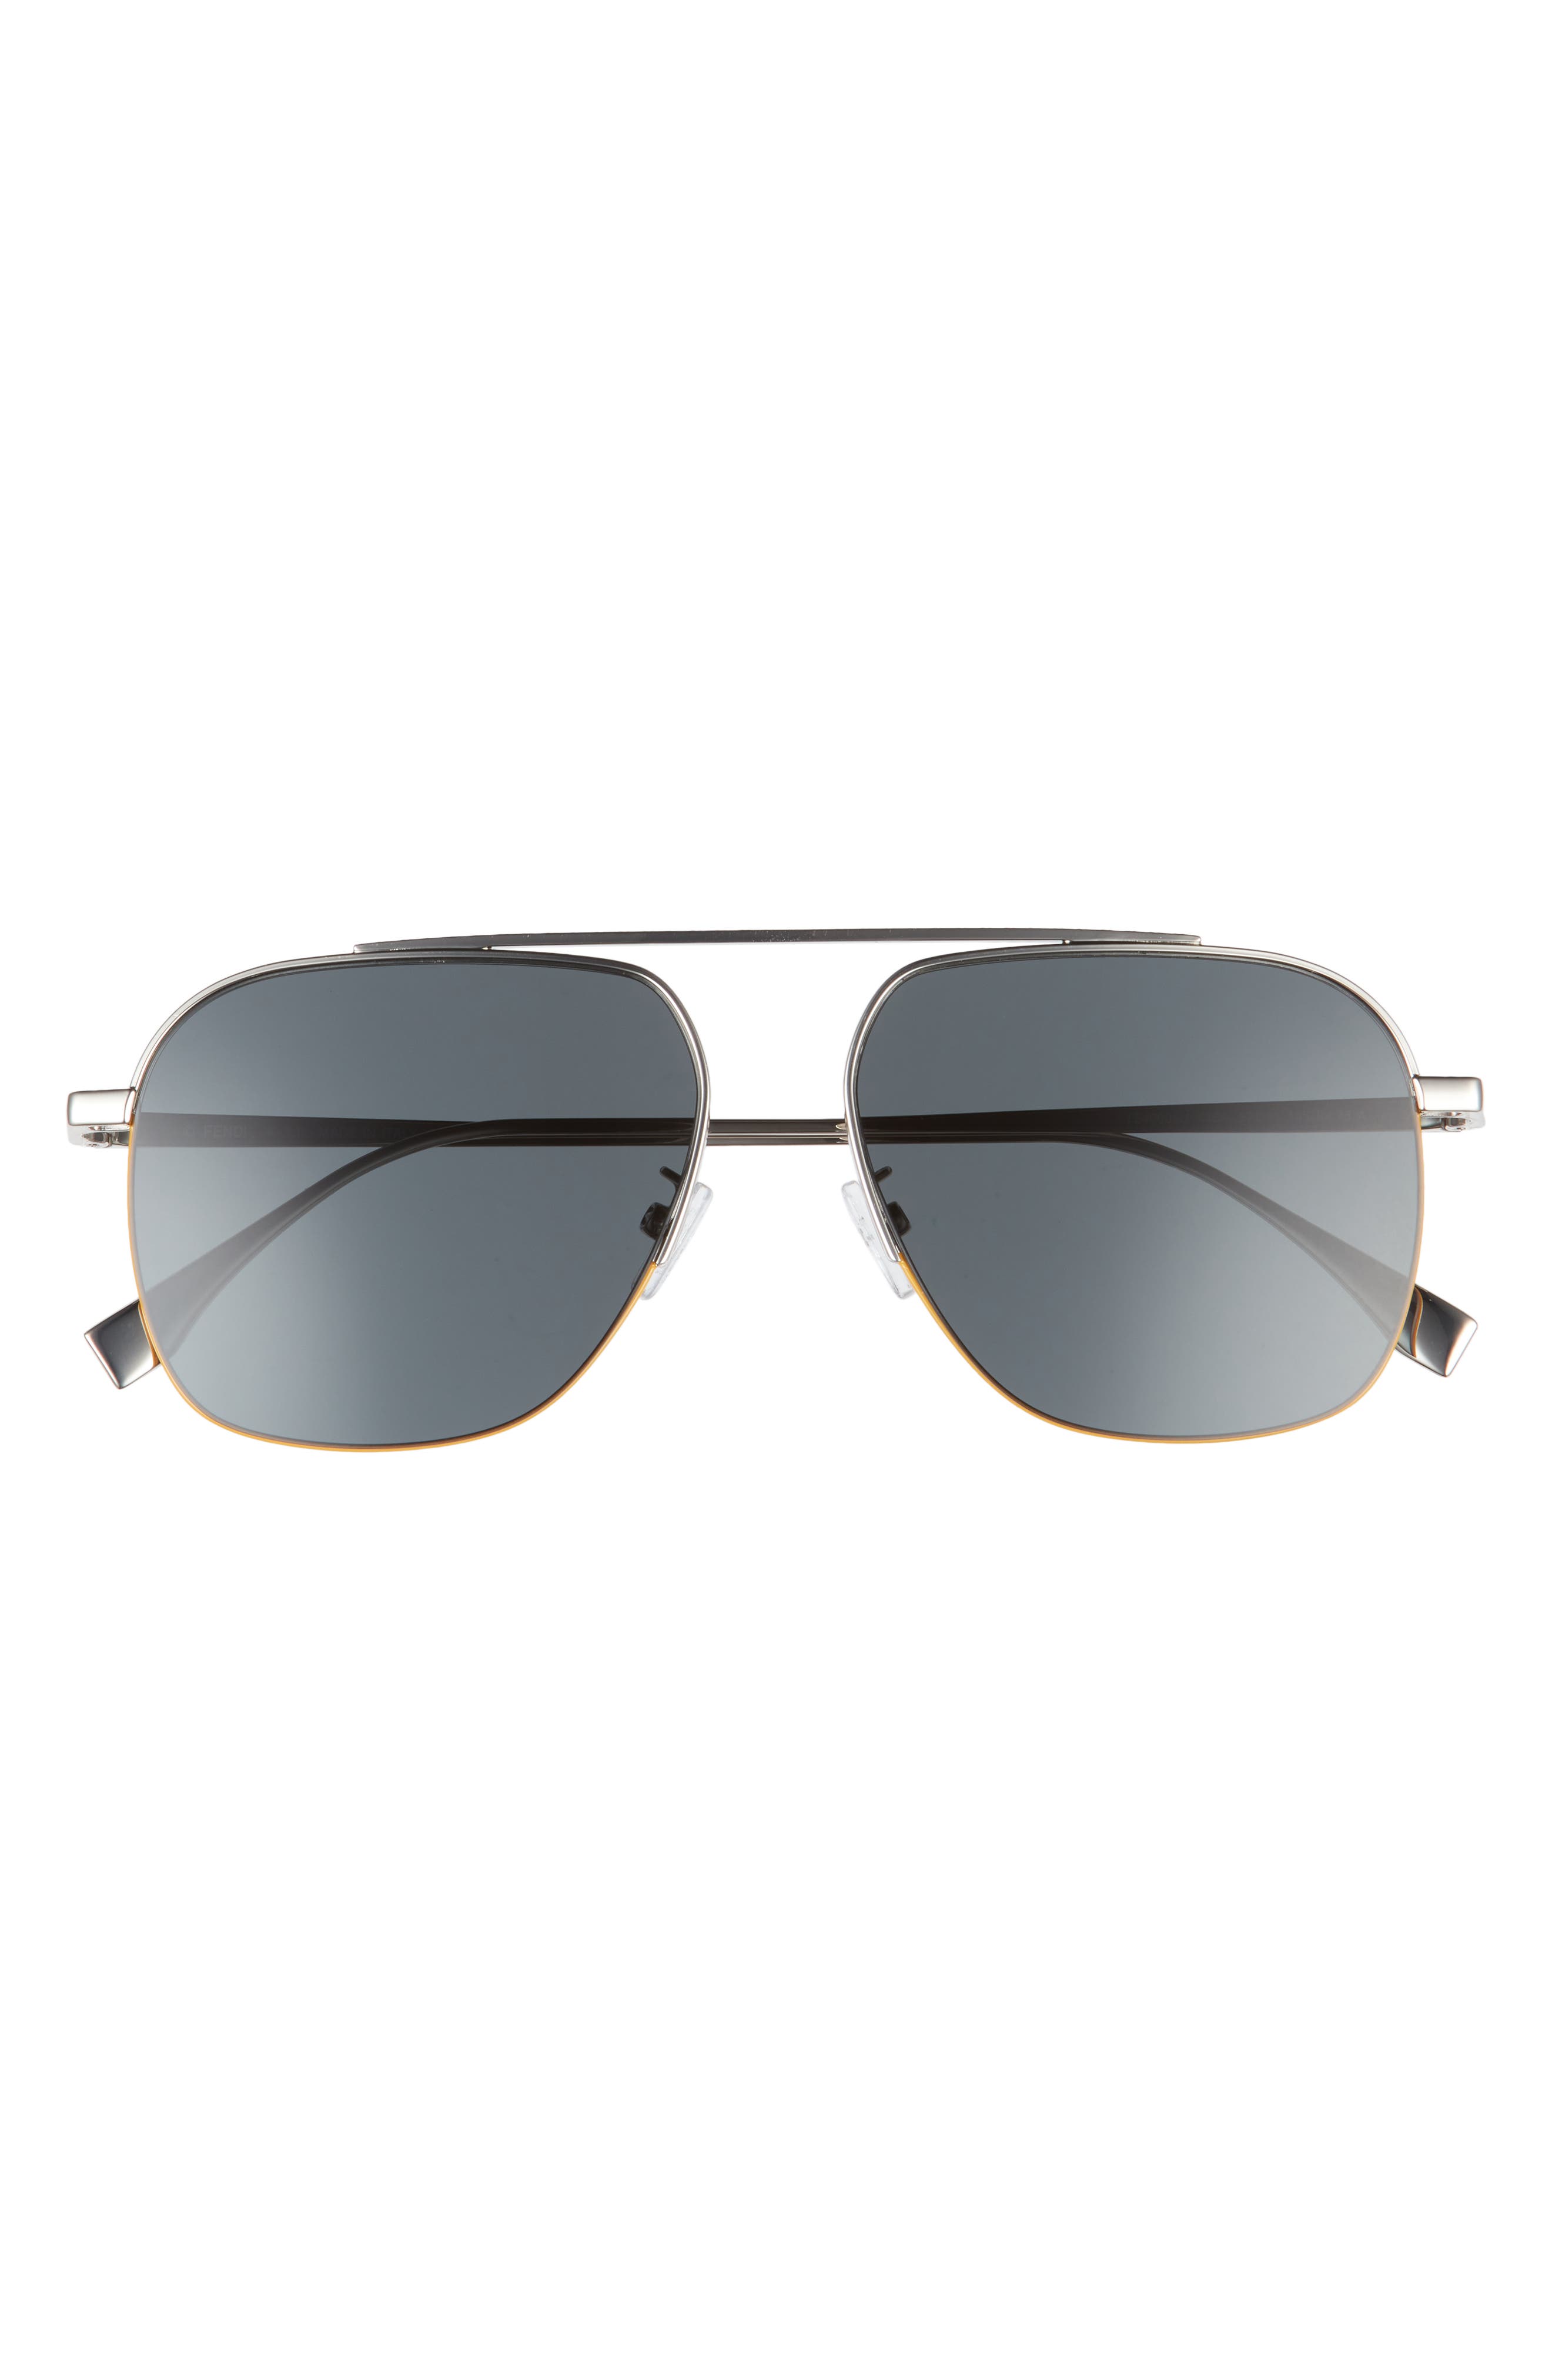 Fendi 55mm Aviator Sunglasses in Shiny Palladium /Smoke at Nordstrom